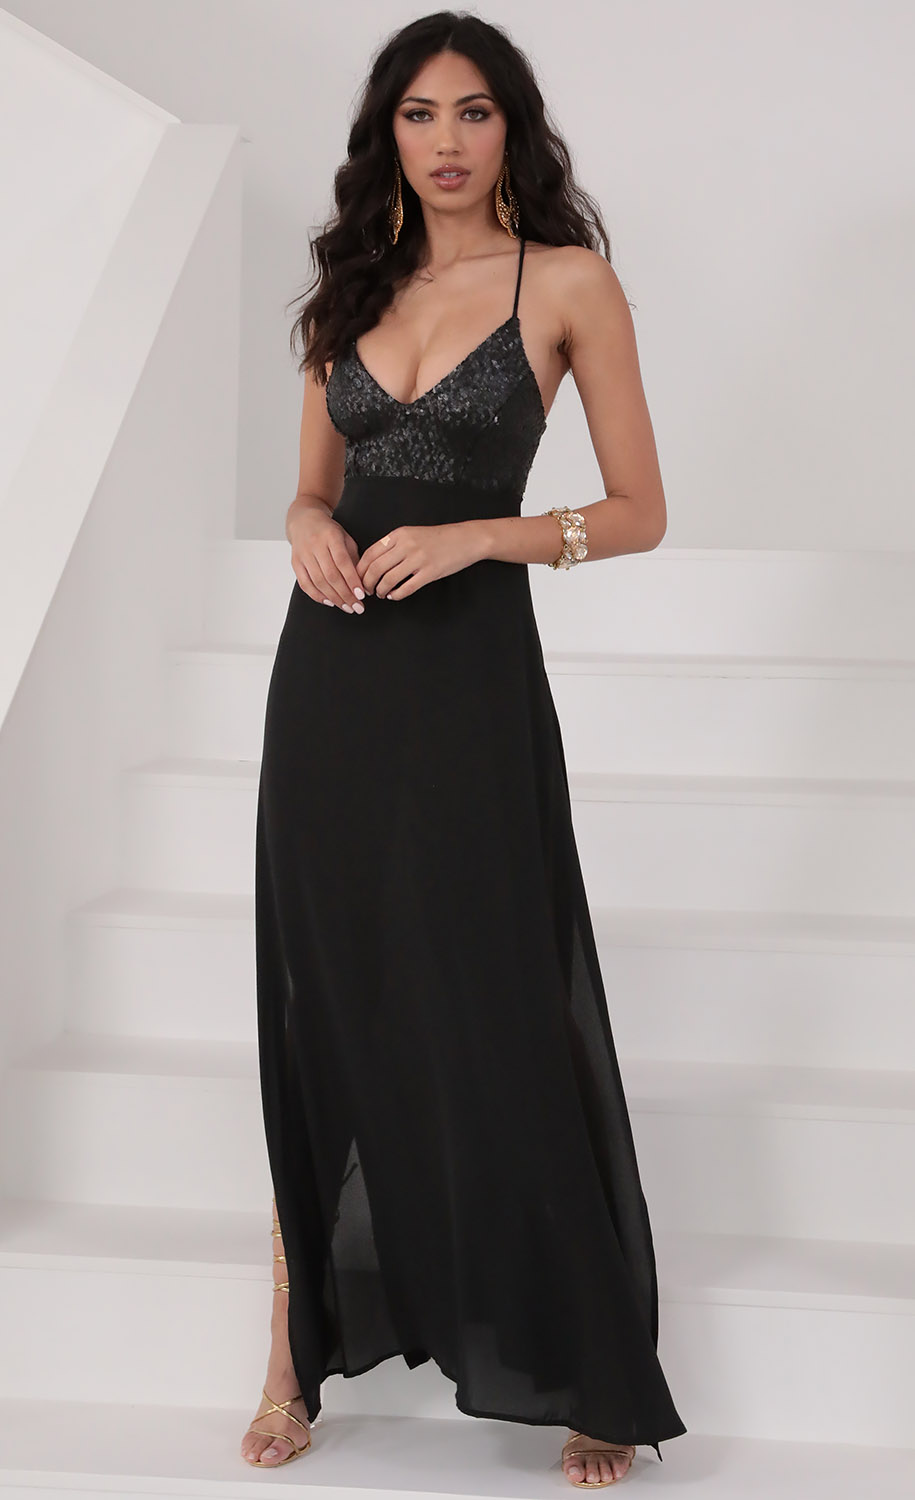 Party dresses > Kaylen Sequin Lace Maxi Dress in Black